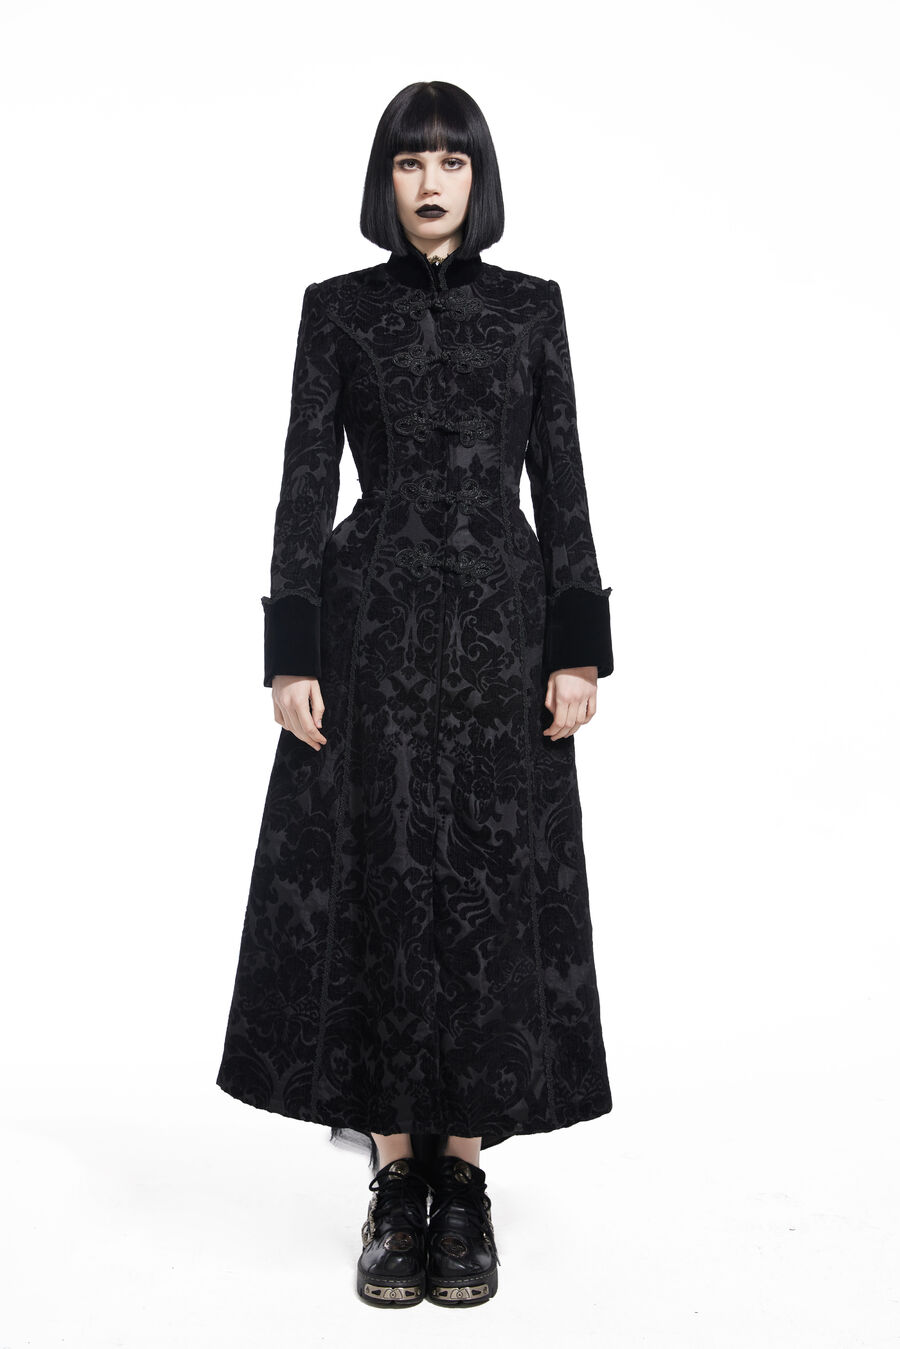 photo n°5 : Manteau long femme gothic brocard noir